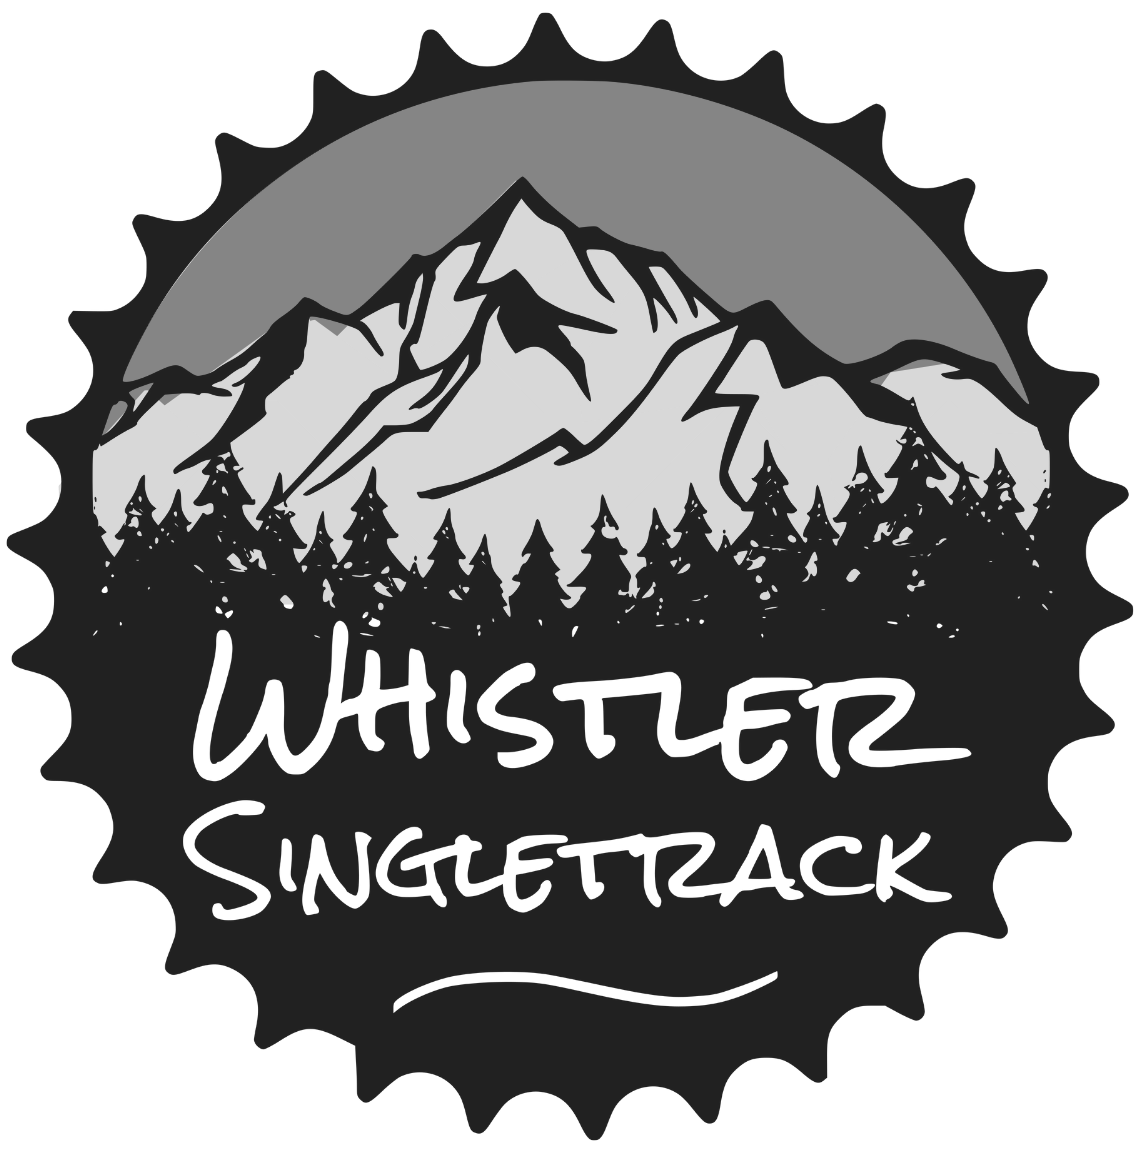 Whistler Singletrack logo b&w.png